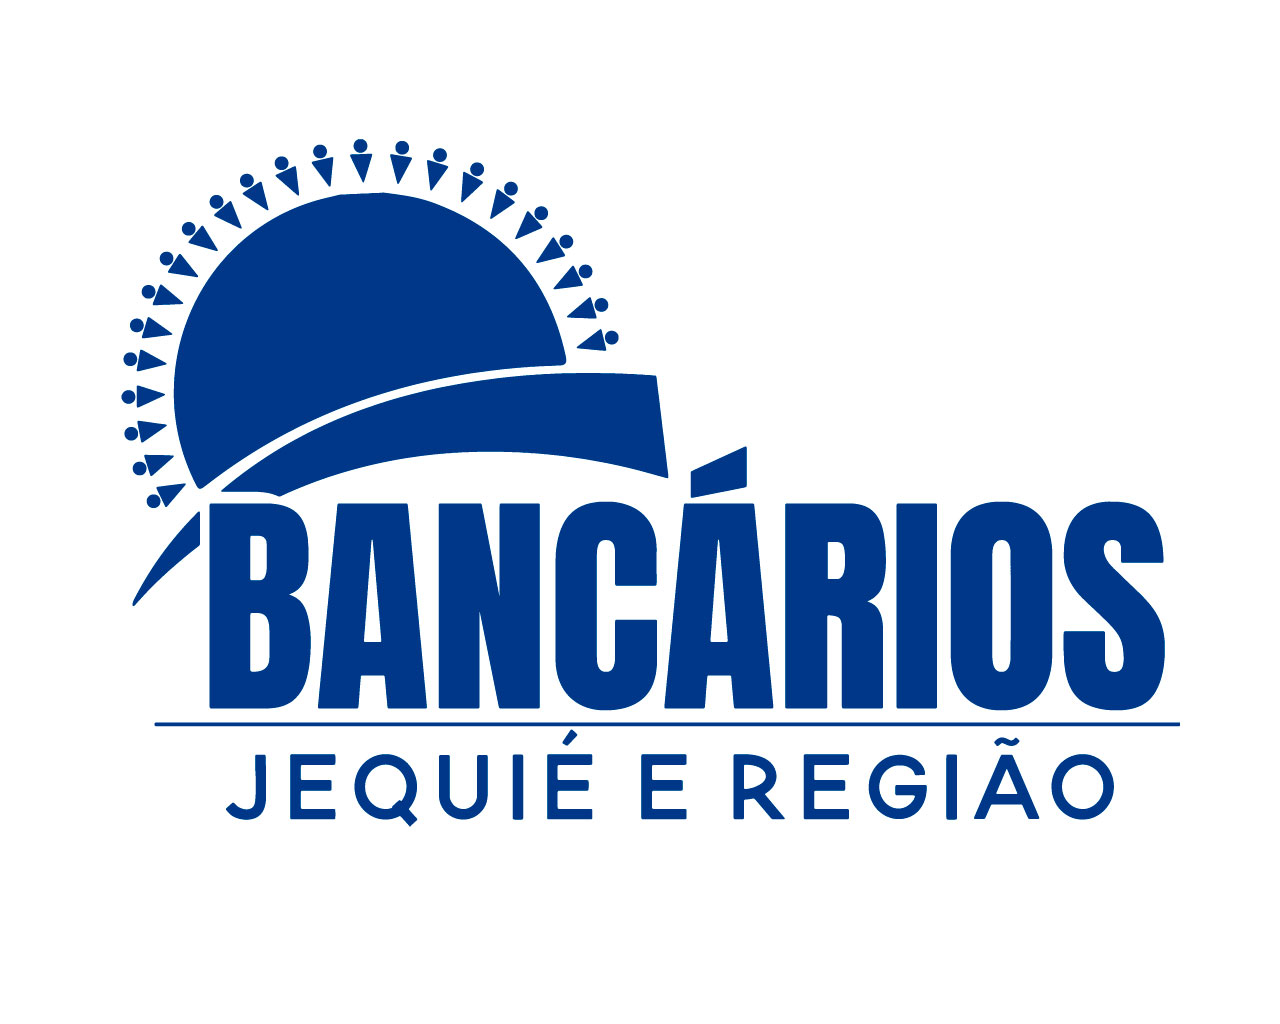 (c) Bancariosjequie.com.br